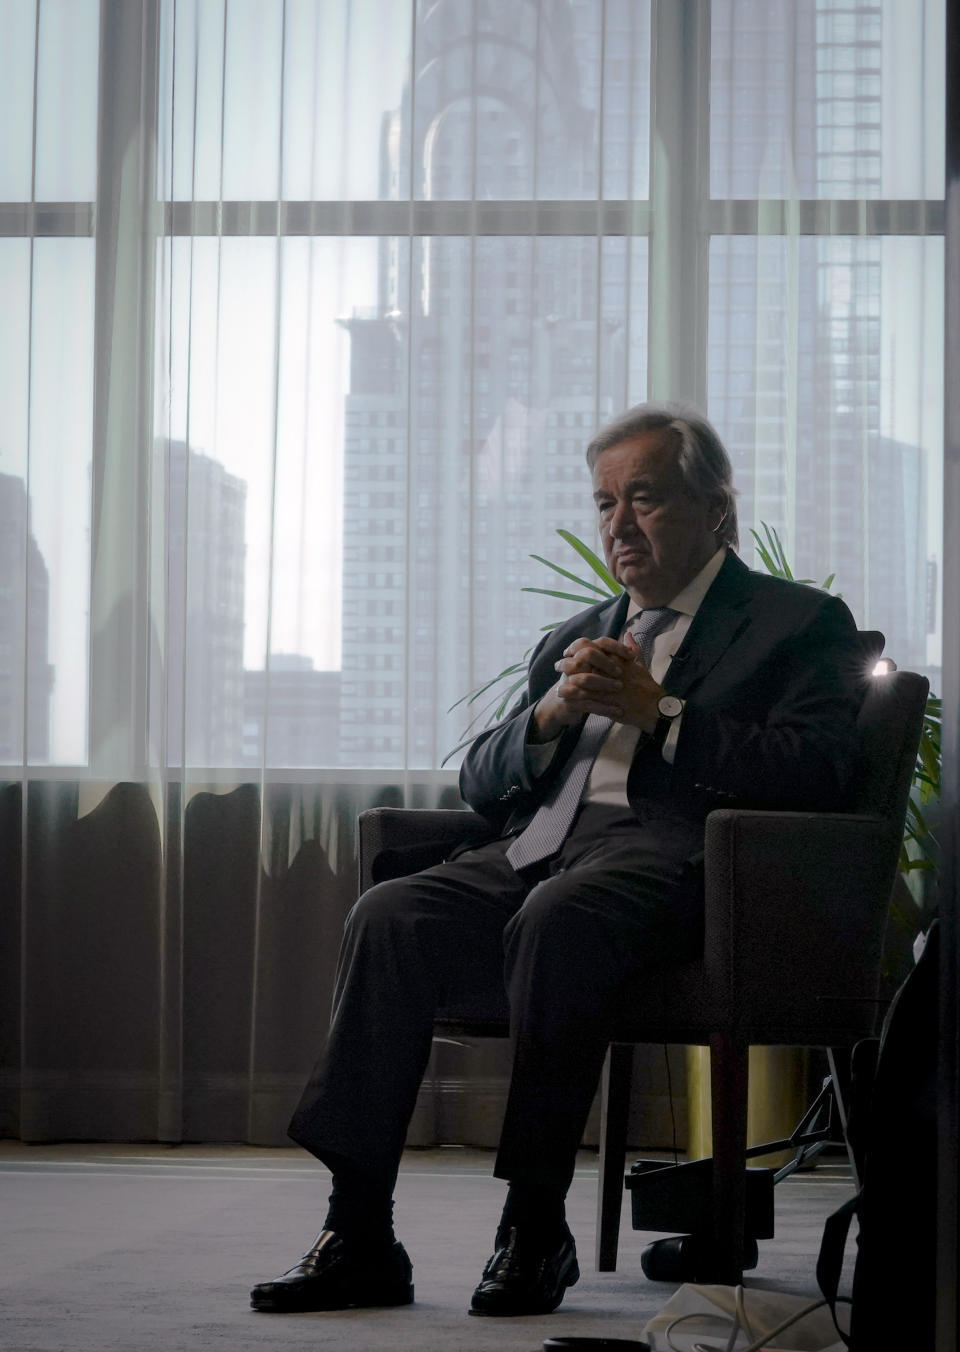 United Nations Secretary-General António Guterres listens during an interview, Wednesday Oct. 21, 2020, at U.N. headquarters. (AP Photo/Bebeto Matthews)